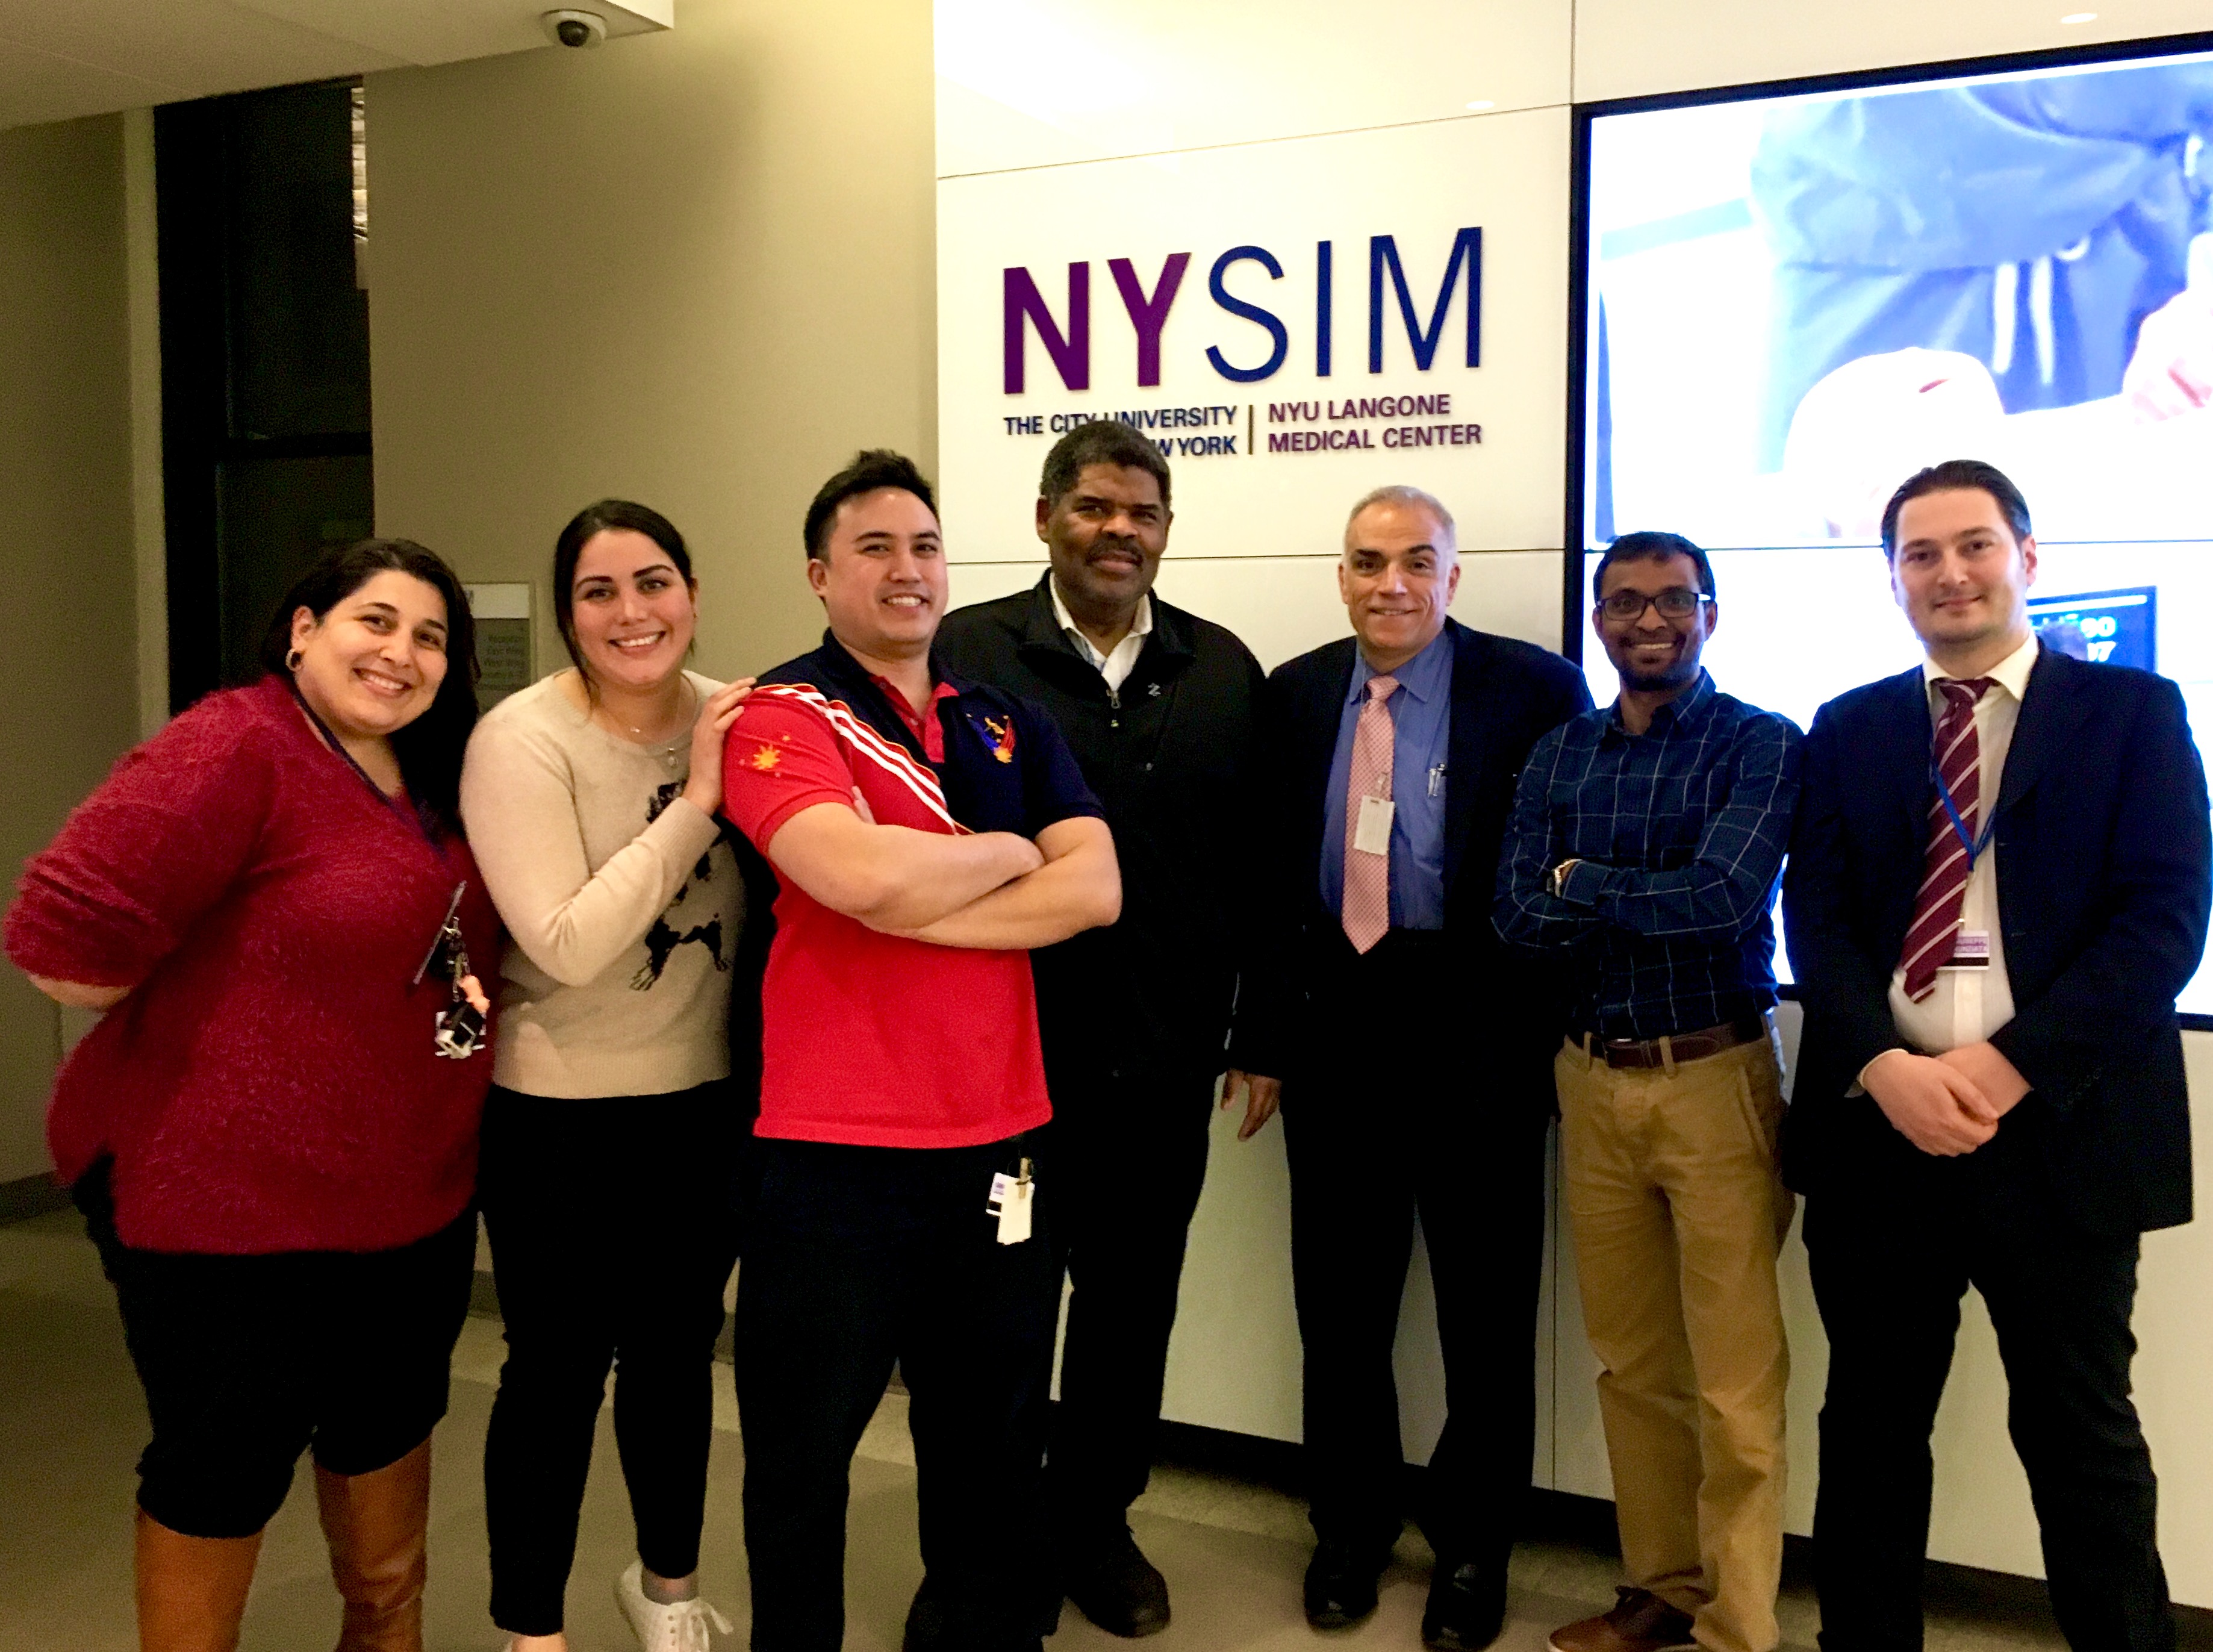 Images of NYSIM training center